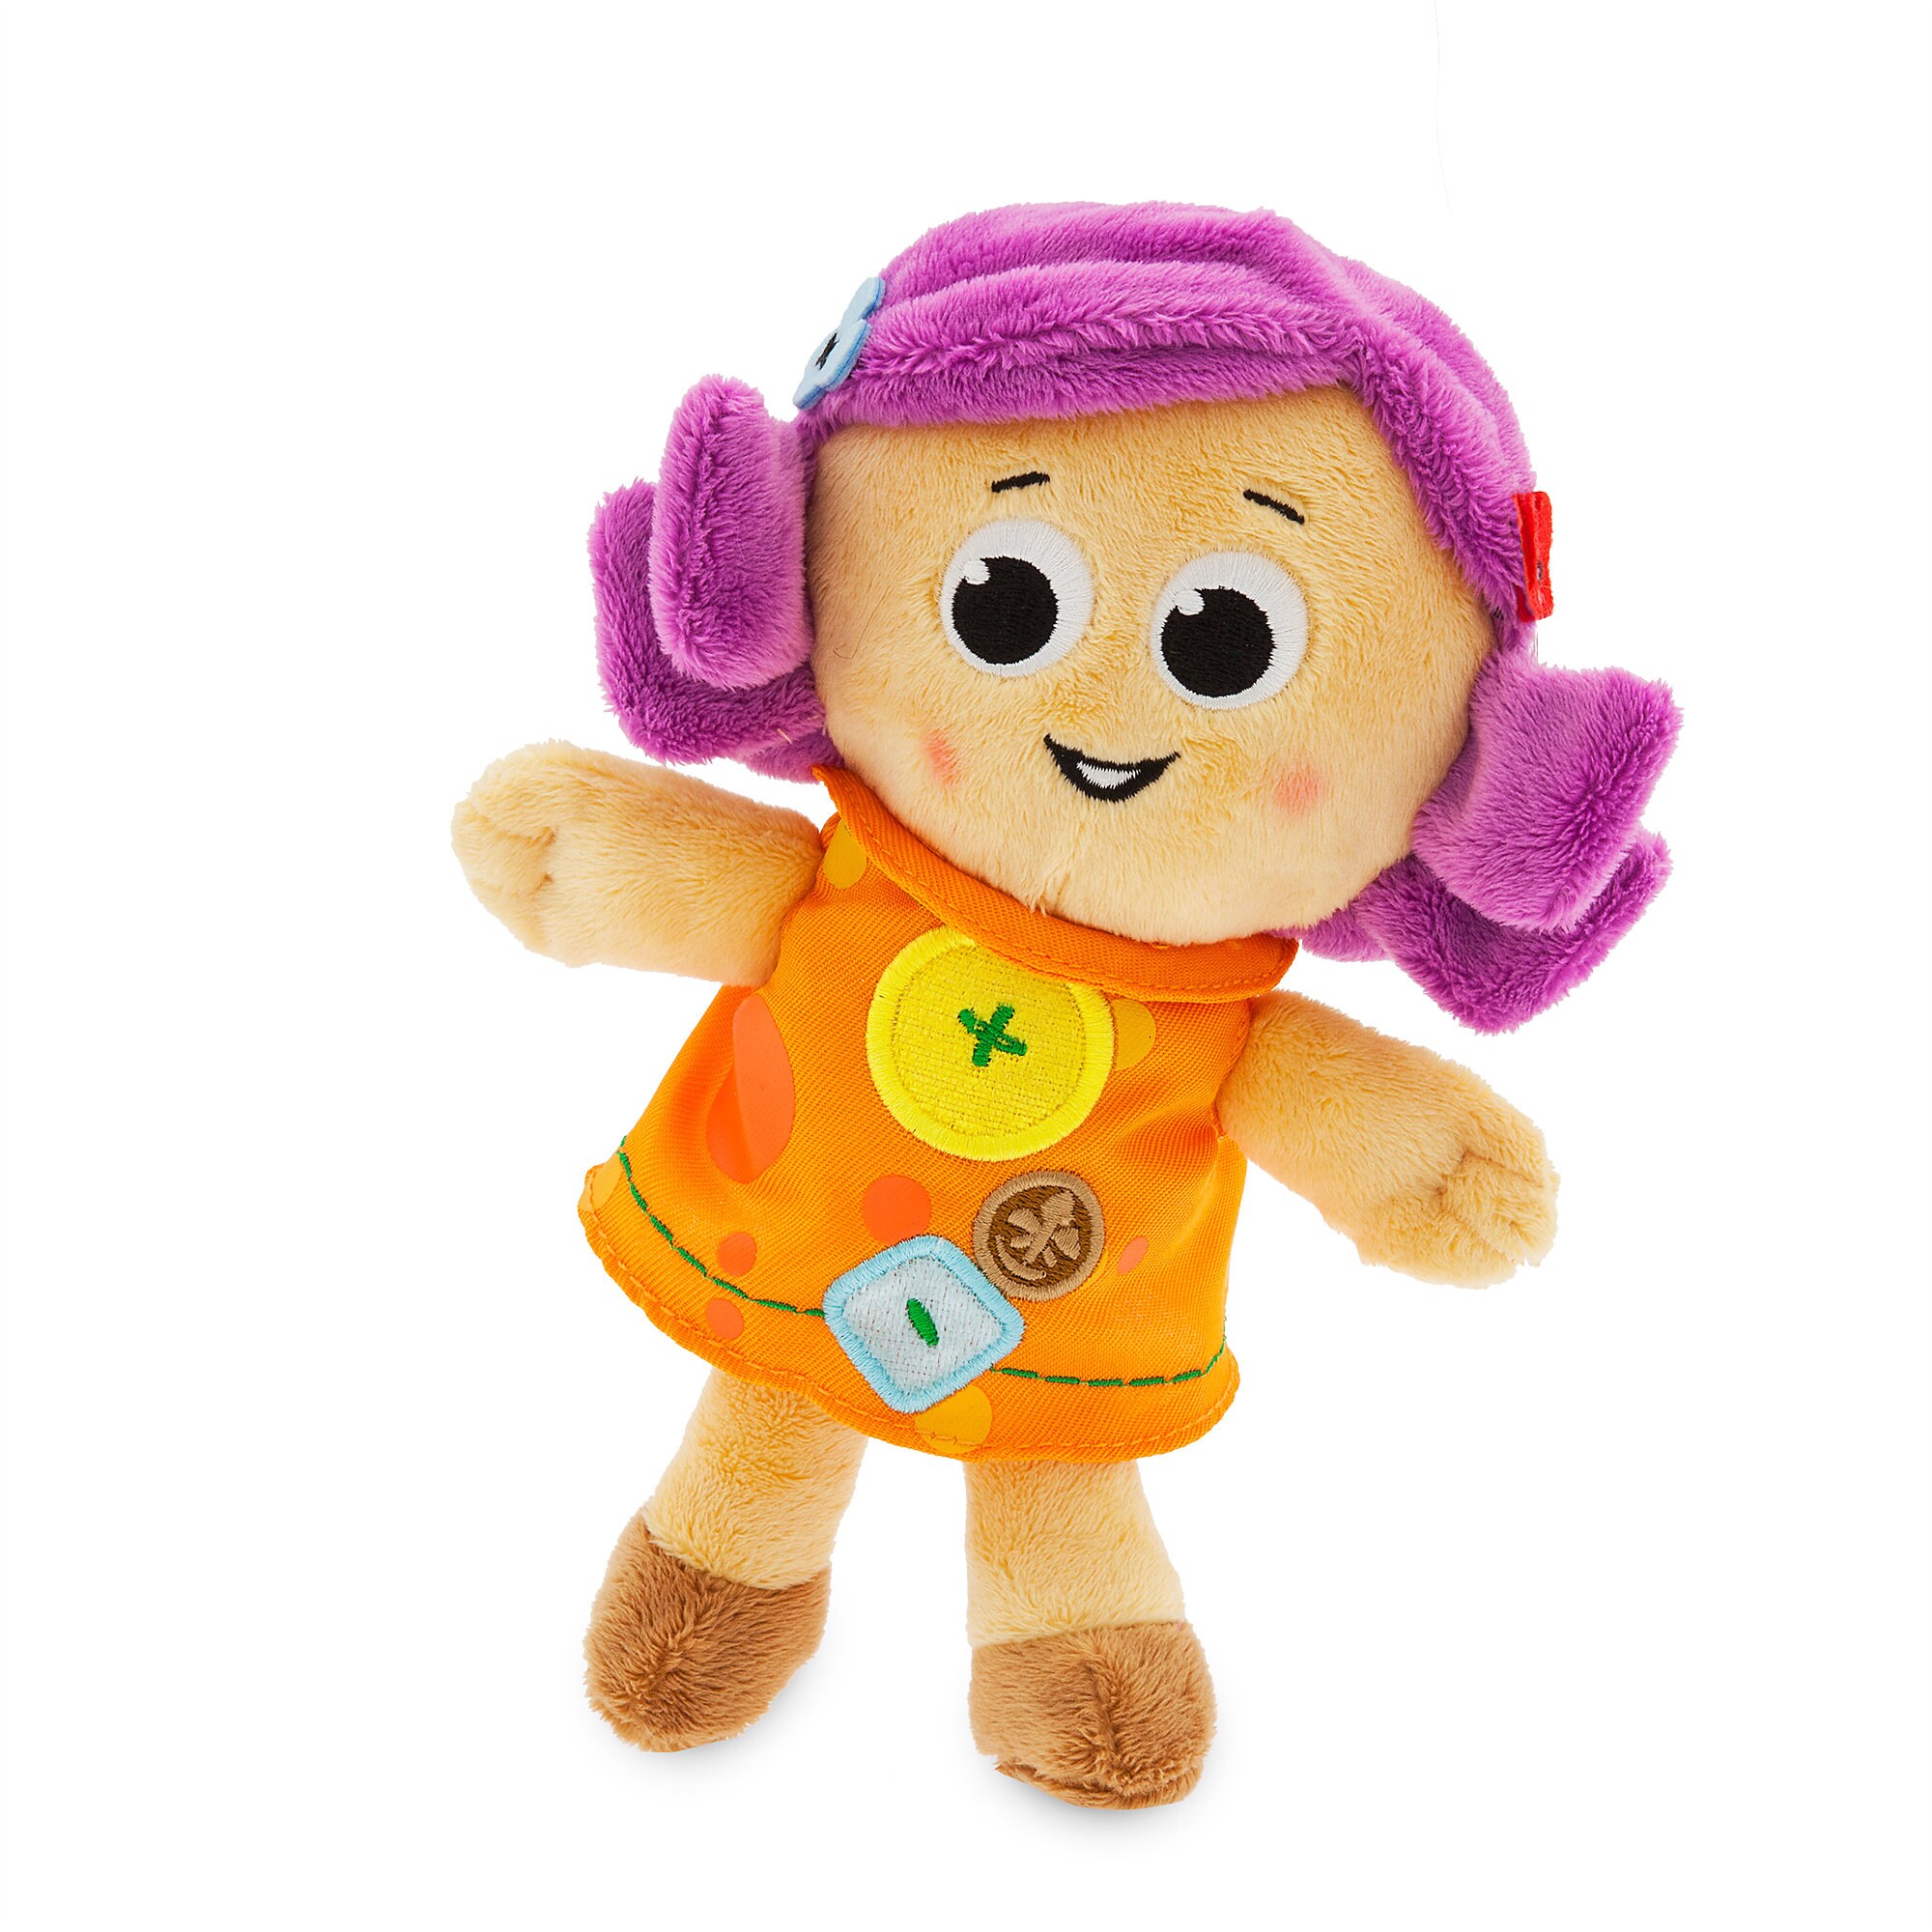 Dolly Plush - Toy Story 4 - Mini Bean Bag - 6''